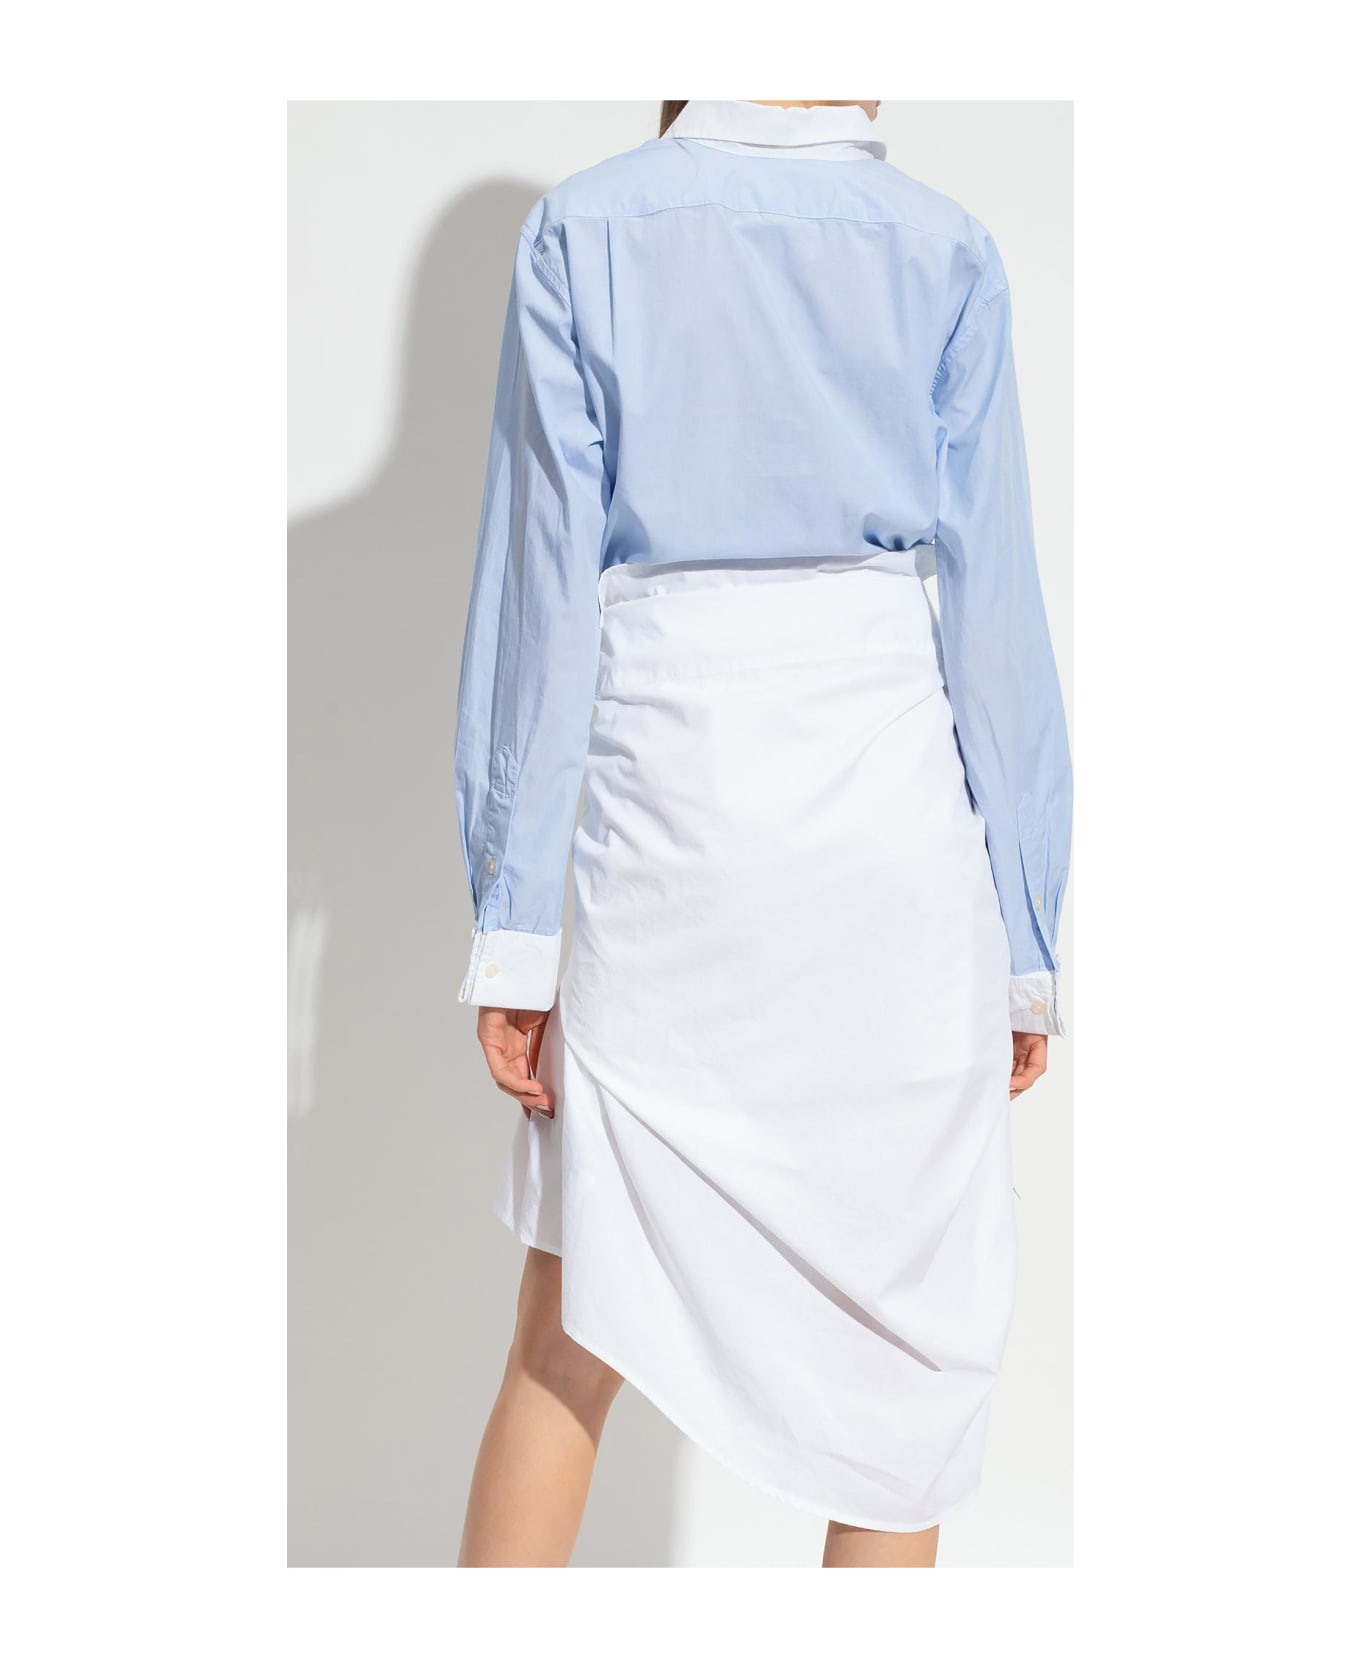 R13 Shirt Dress - BLUE/WHITE